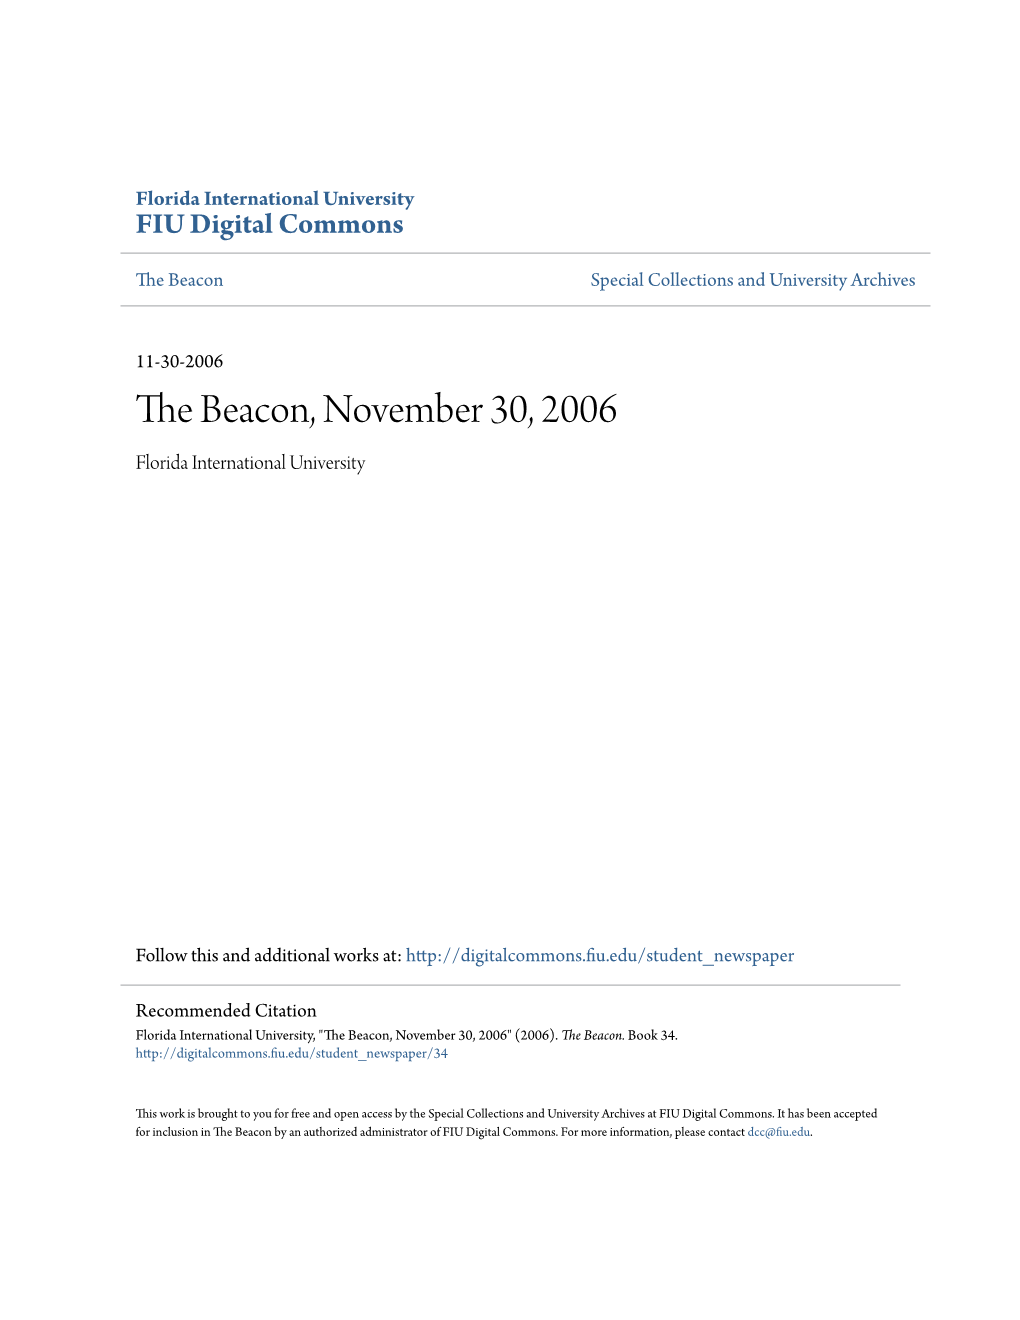 The Beacon, November 30, 2006 Florida International University